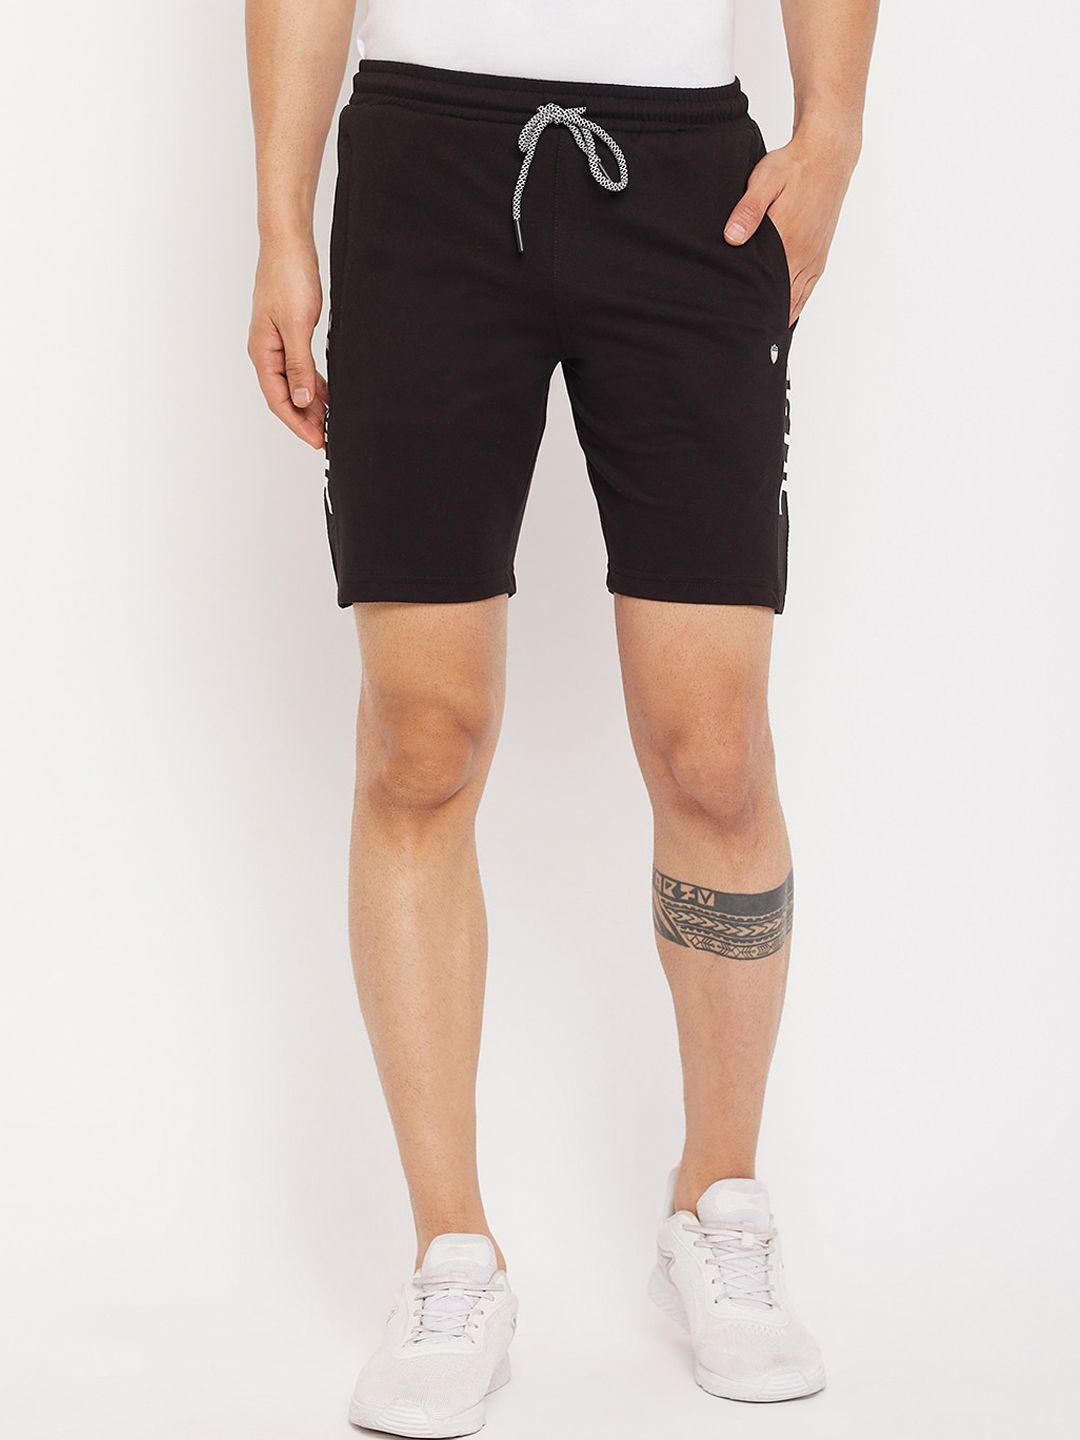 duke-men-typography-printed-training-or-gym-sports-cotton-shorts